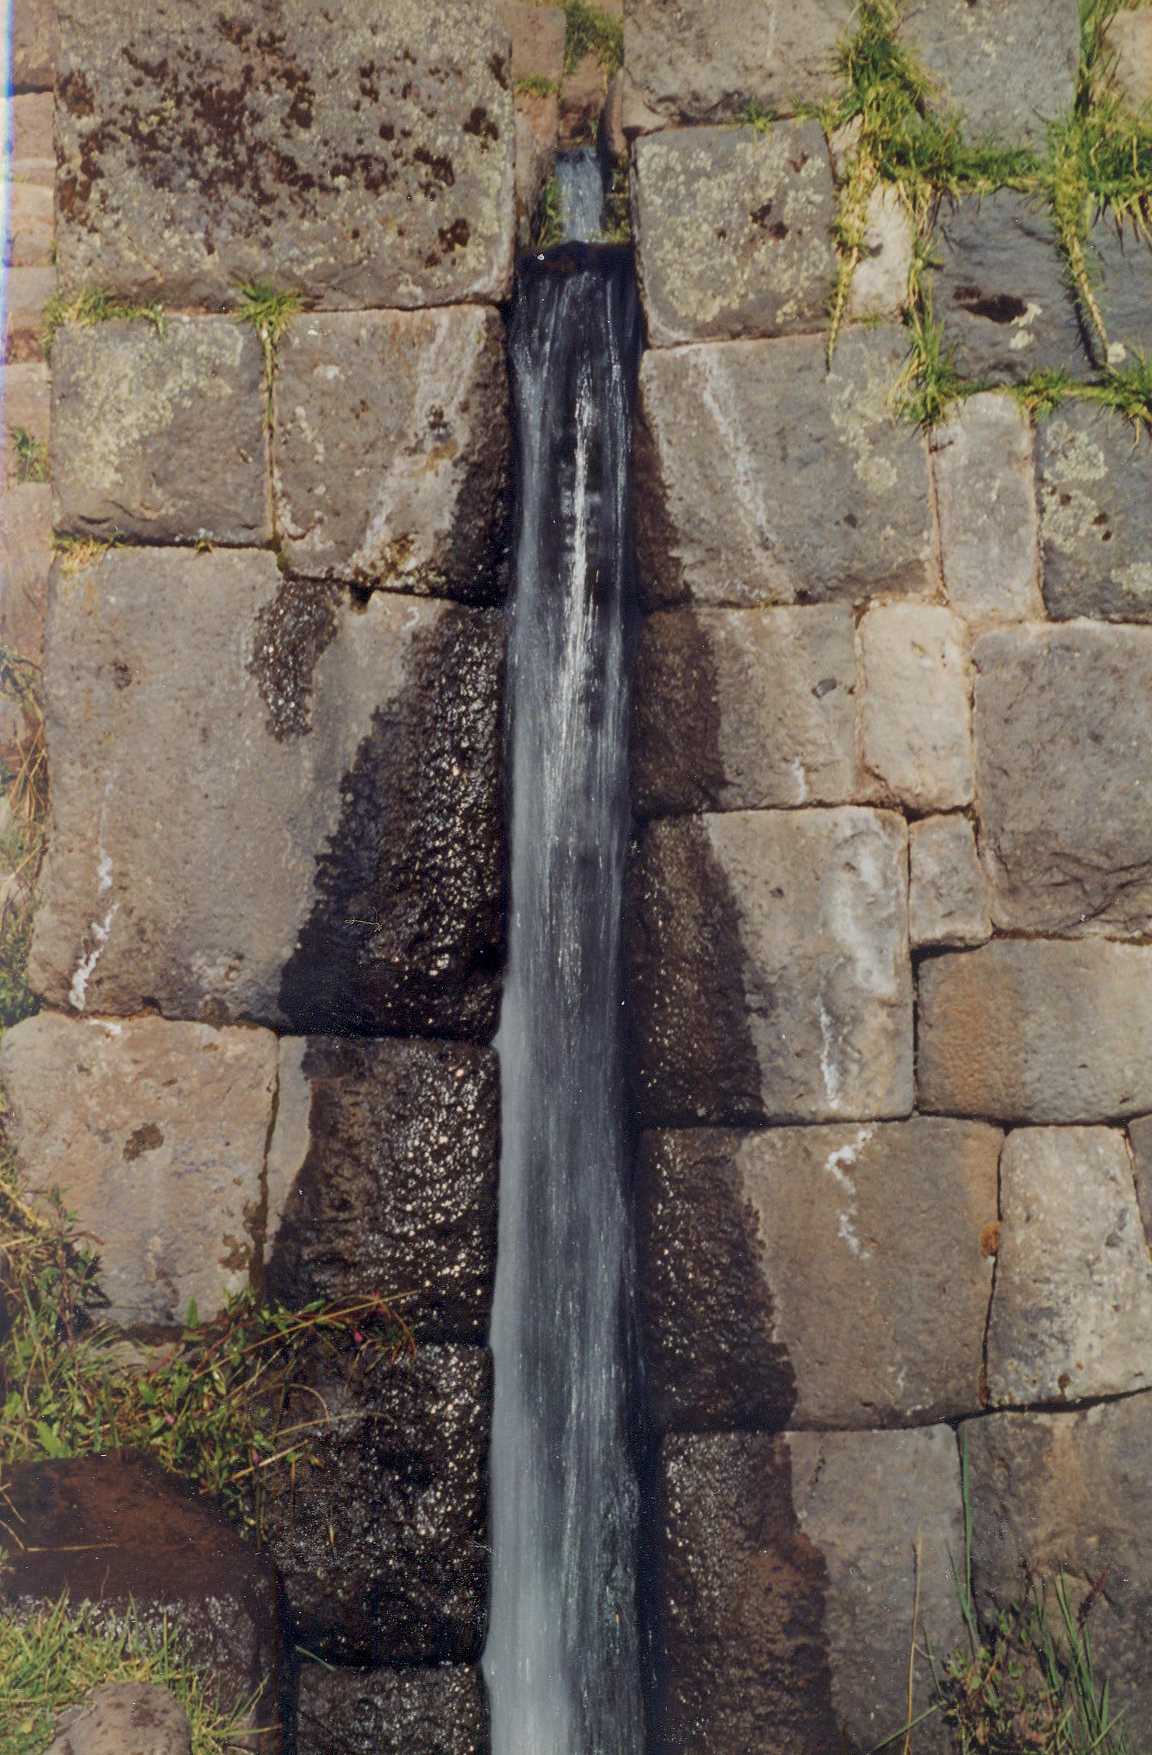 Inca Irrigation Channel